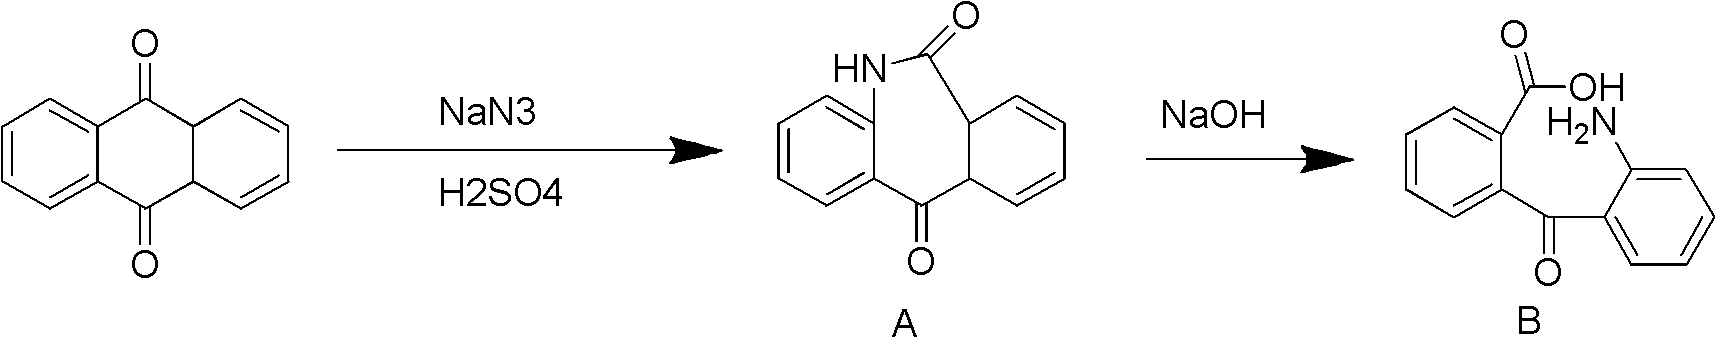 Preparation method of 2-benzo diazepine anthrone